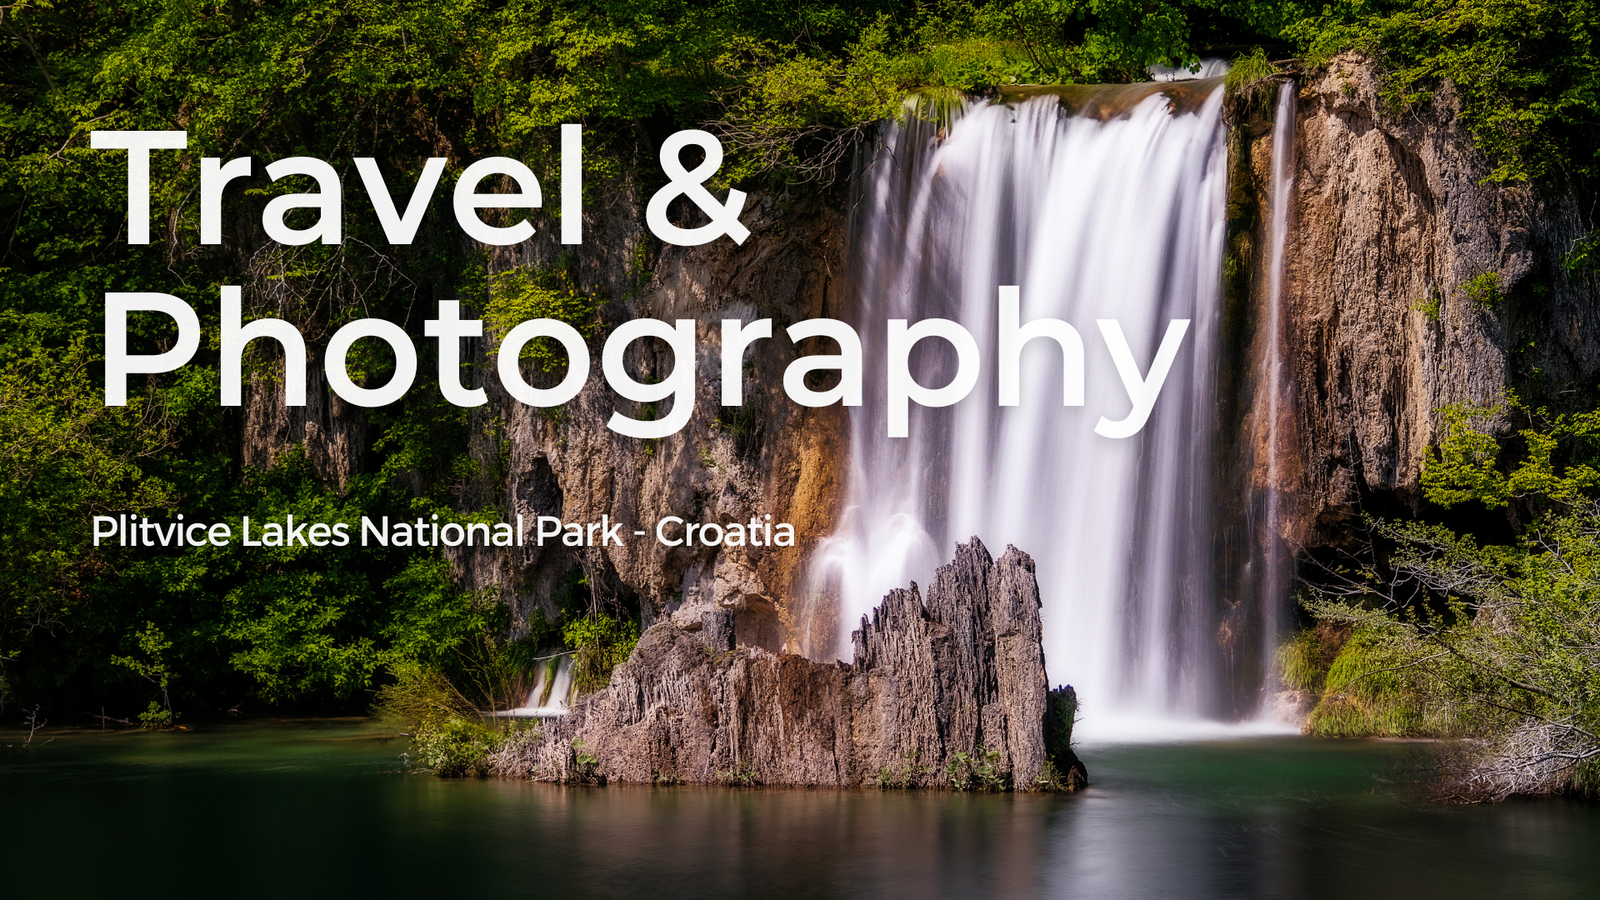 Get lost in Croatia's mesmerizing Plitvice Lakes National Park